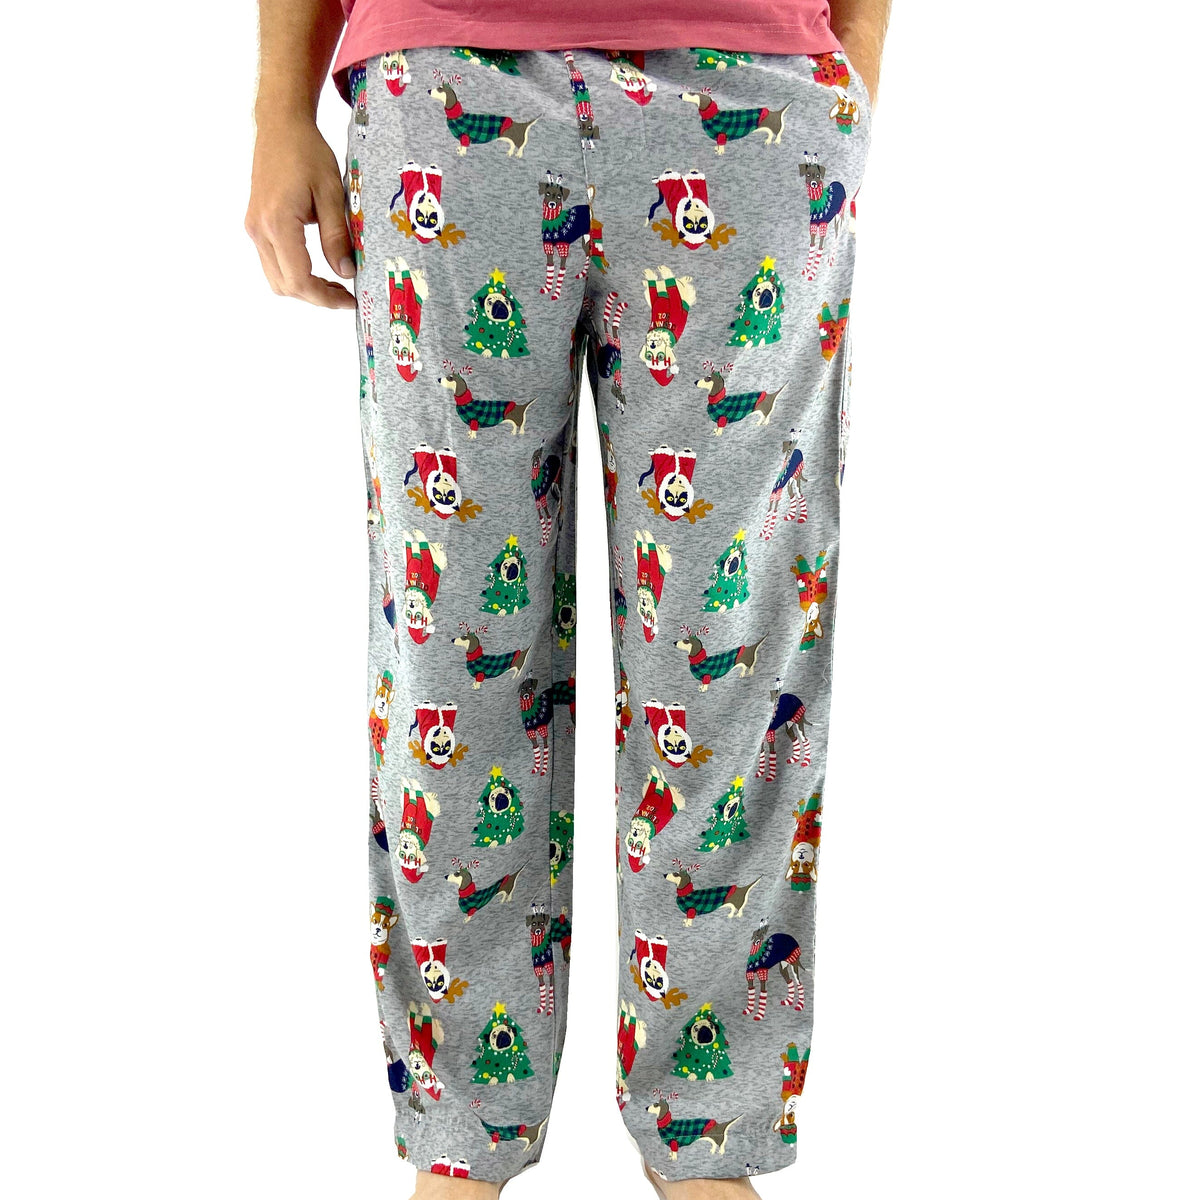 Fuzzy Christmas Mens Casual Pants Pajama Pants With Drawstring And